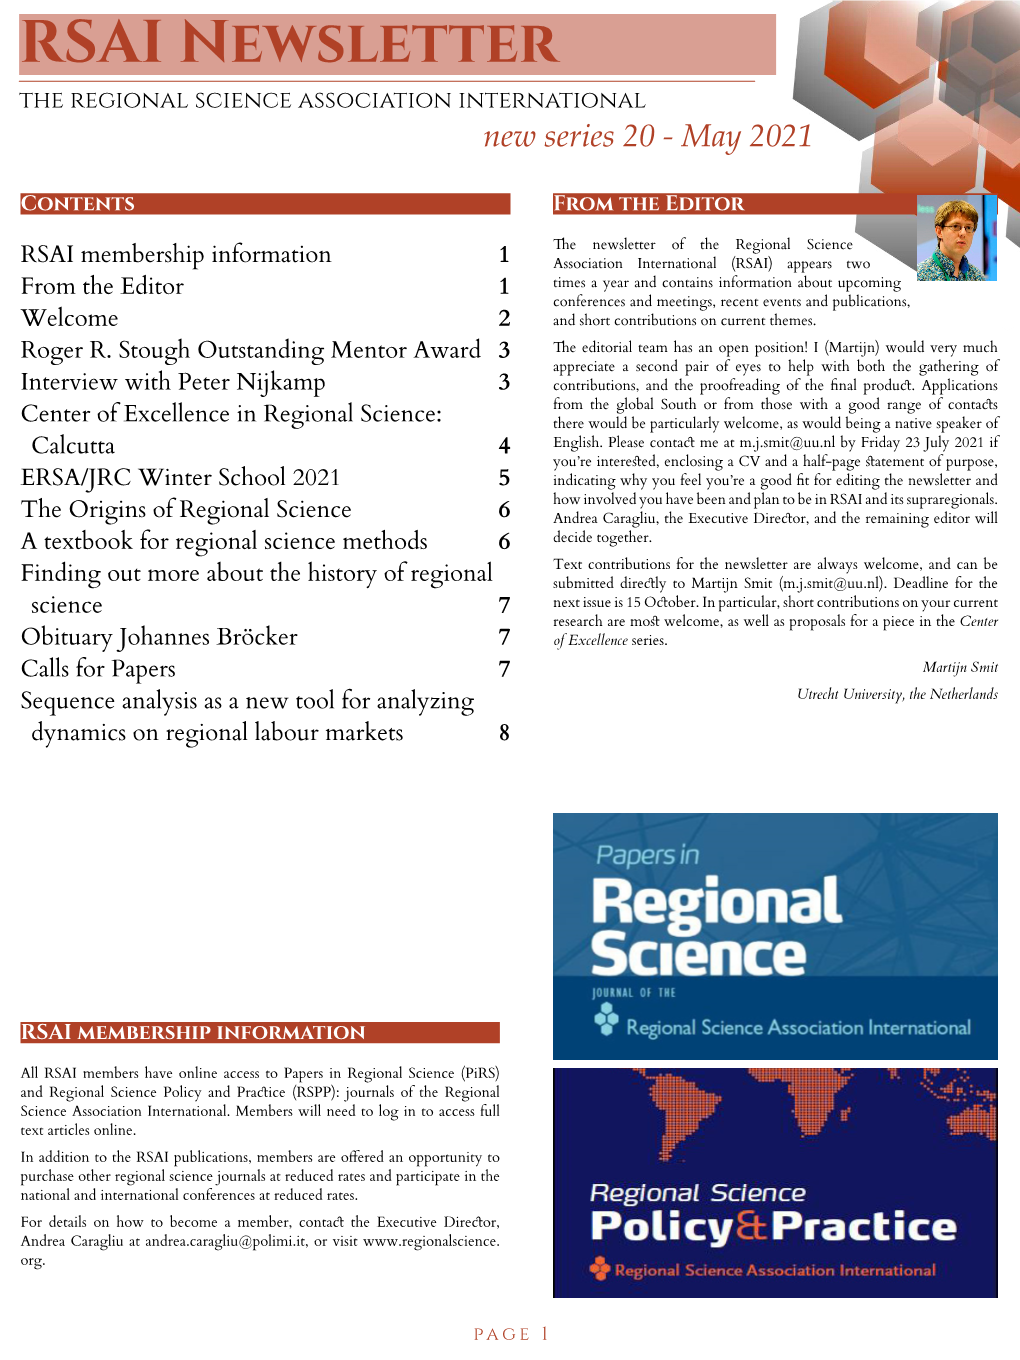 RSAI Newsletter the Regional Science Association International New Series 20 - May 2021